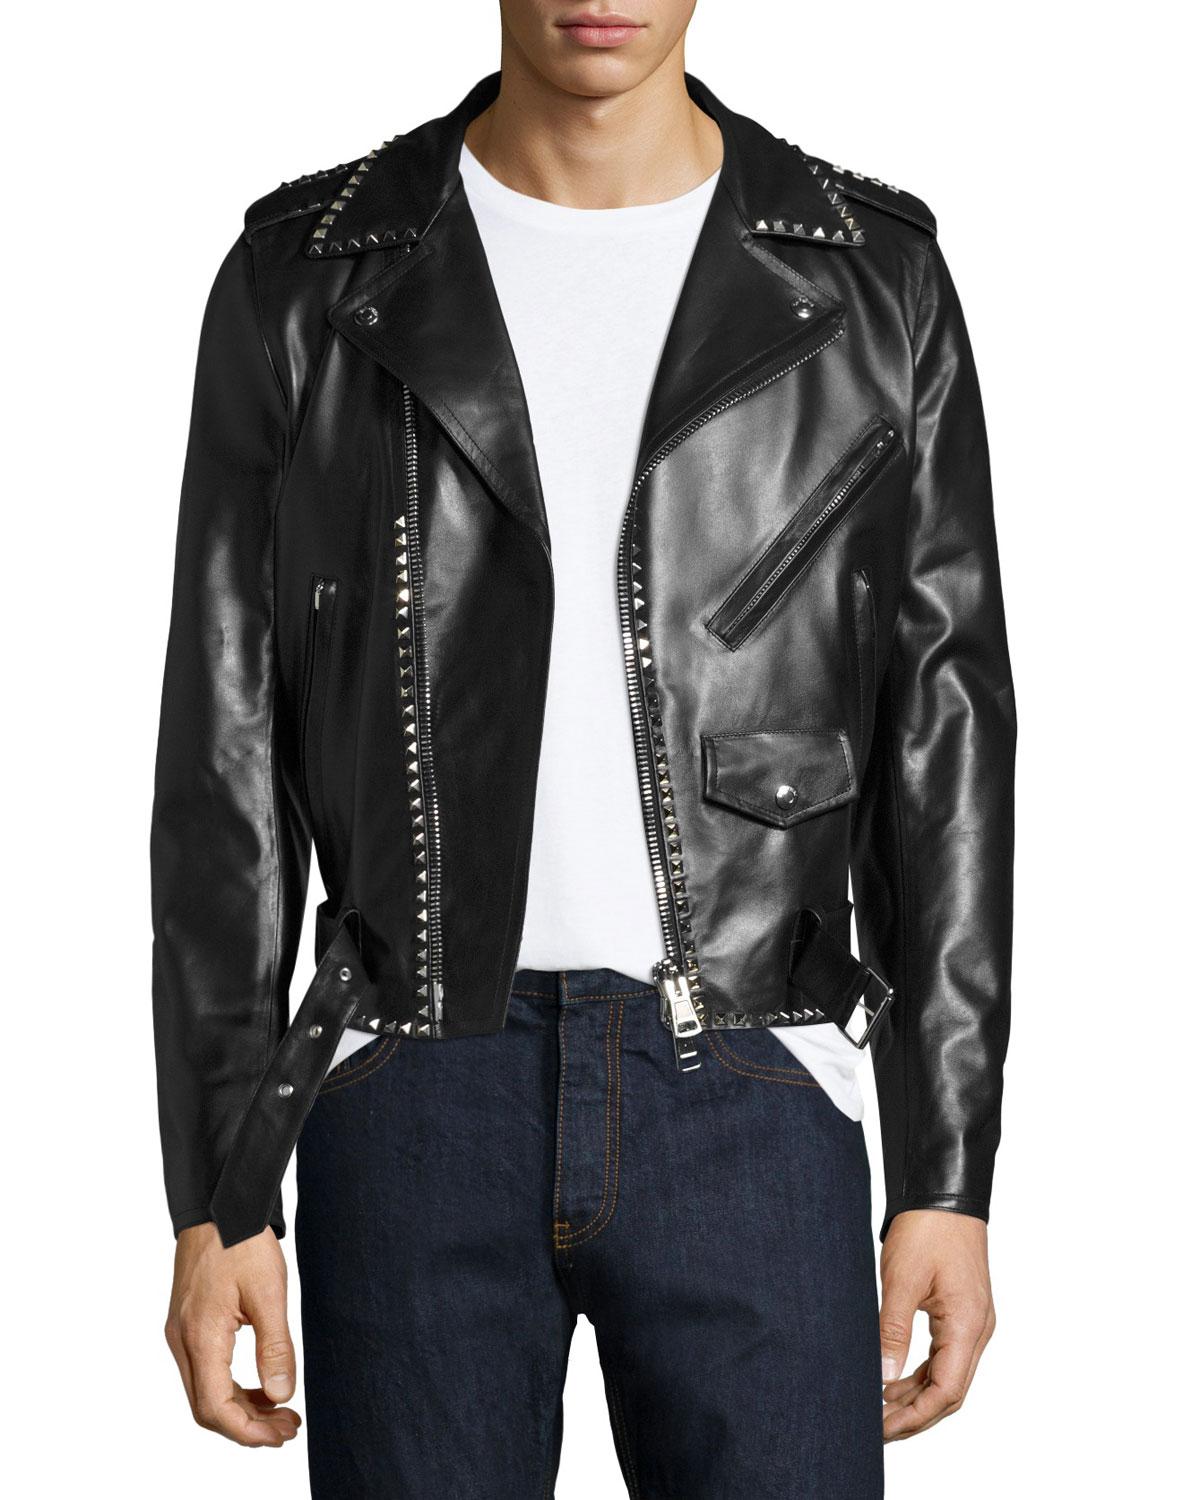 Valentino Rockstud Leather Moto Jacket in Black for Men - Lyst